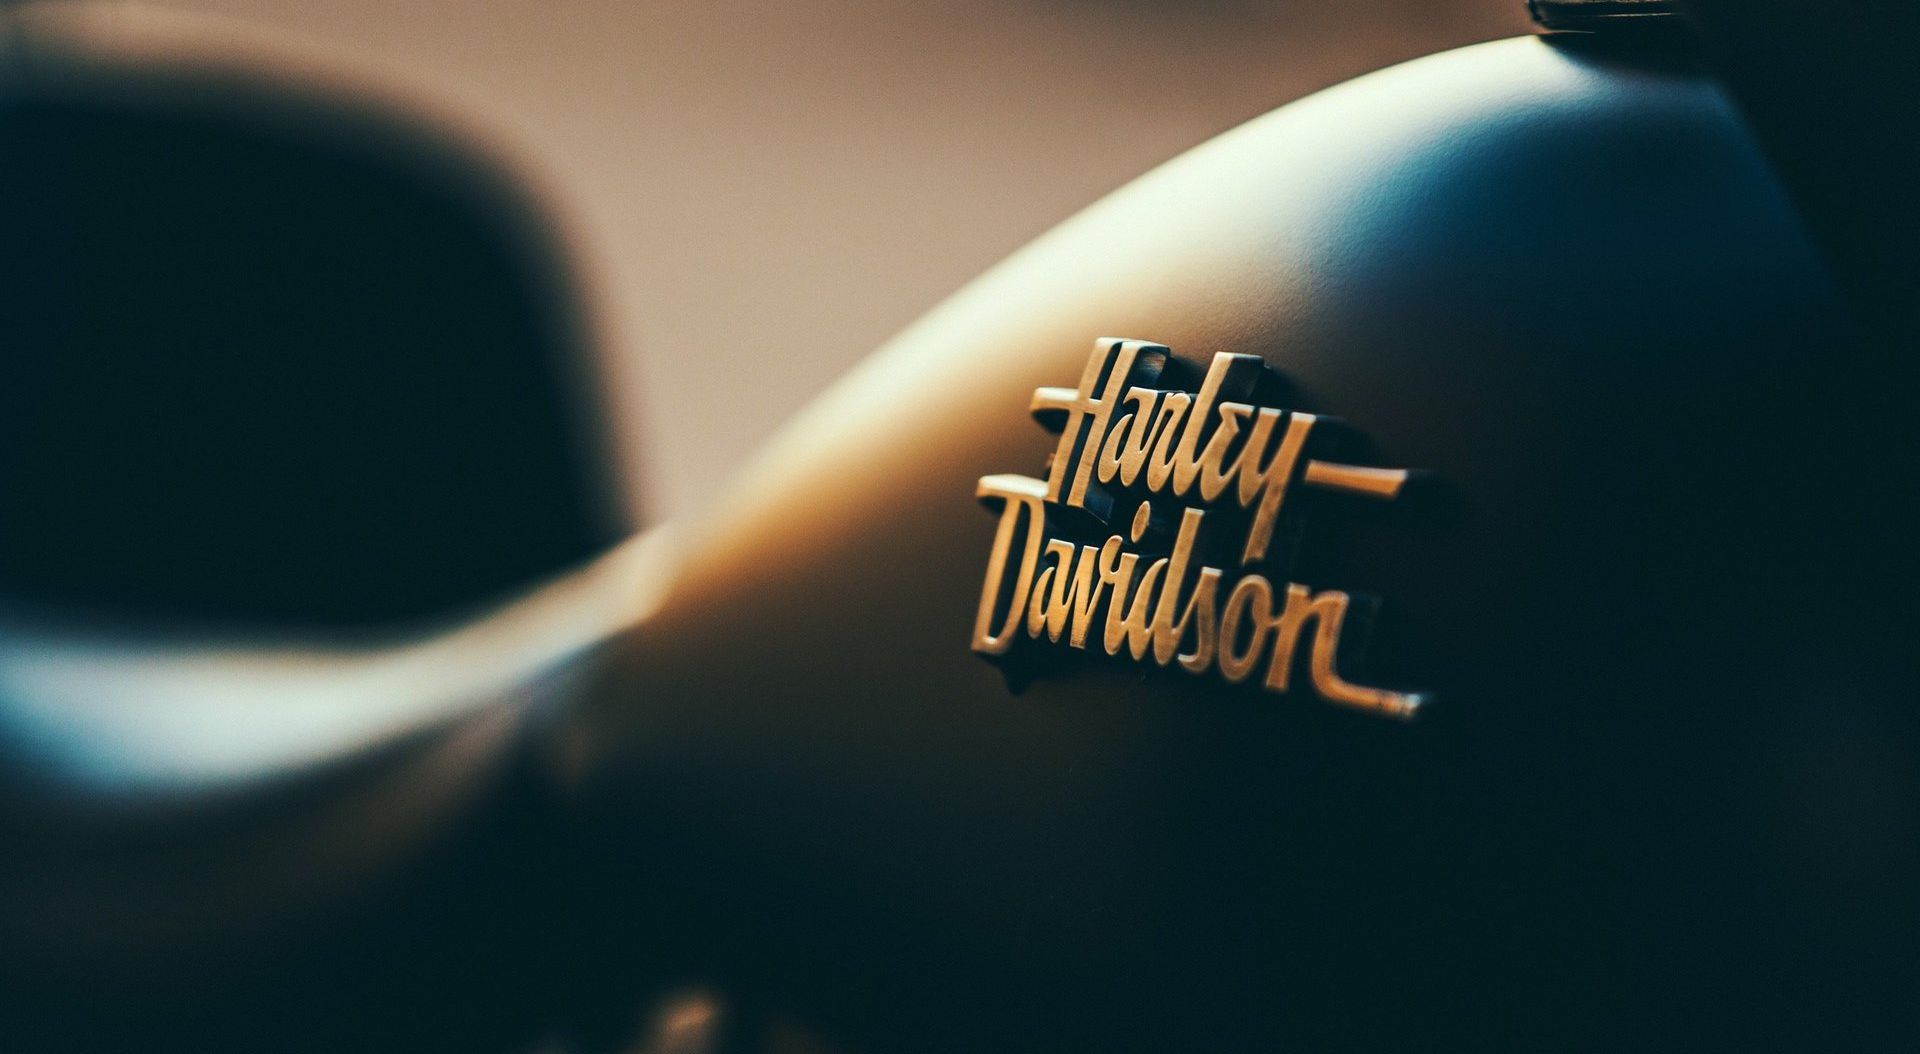 A close up of a harley davidson motorcycle tank